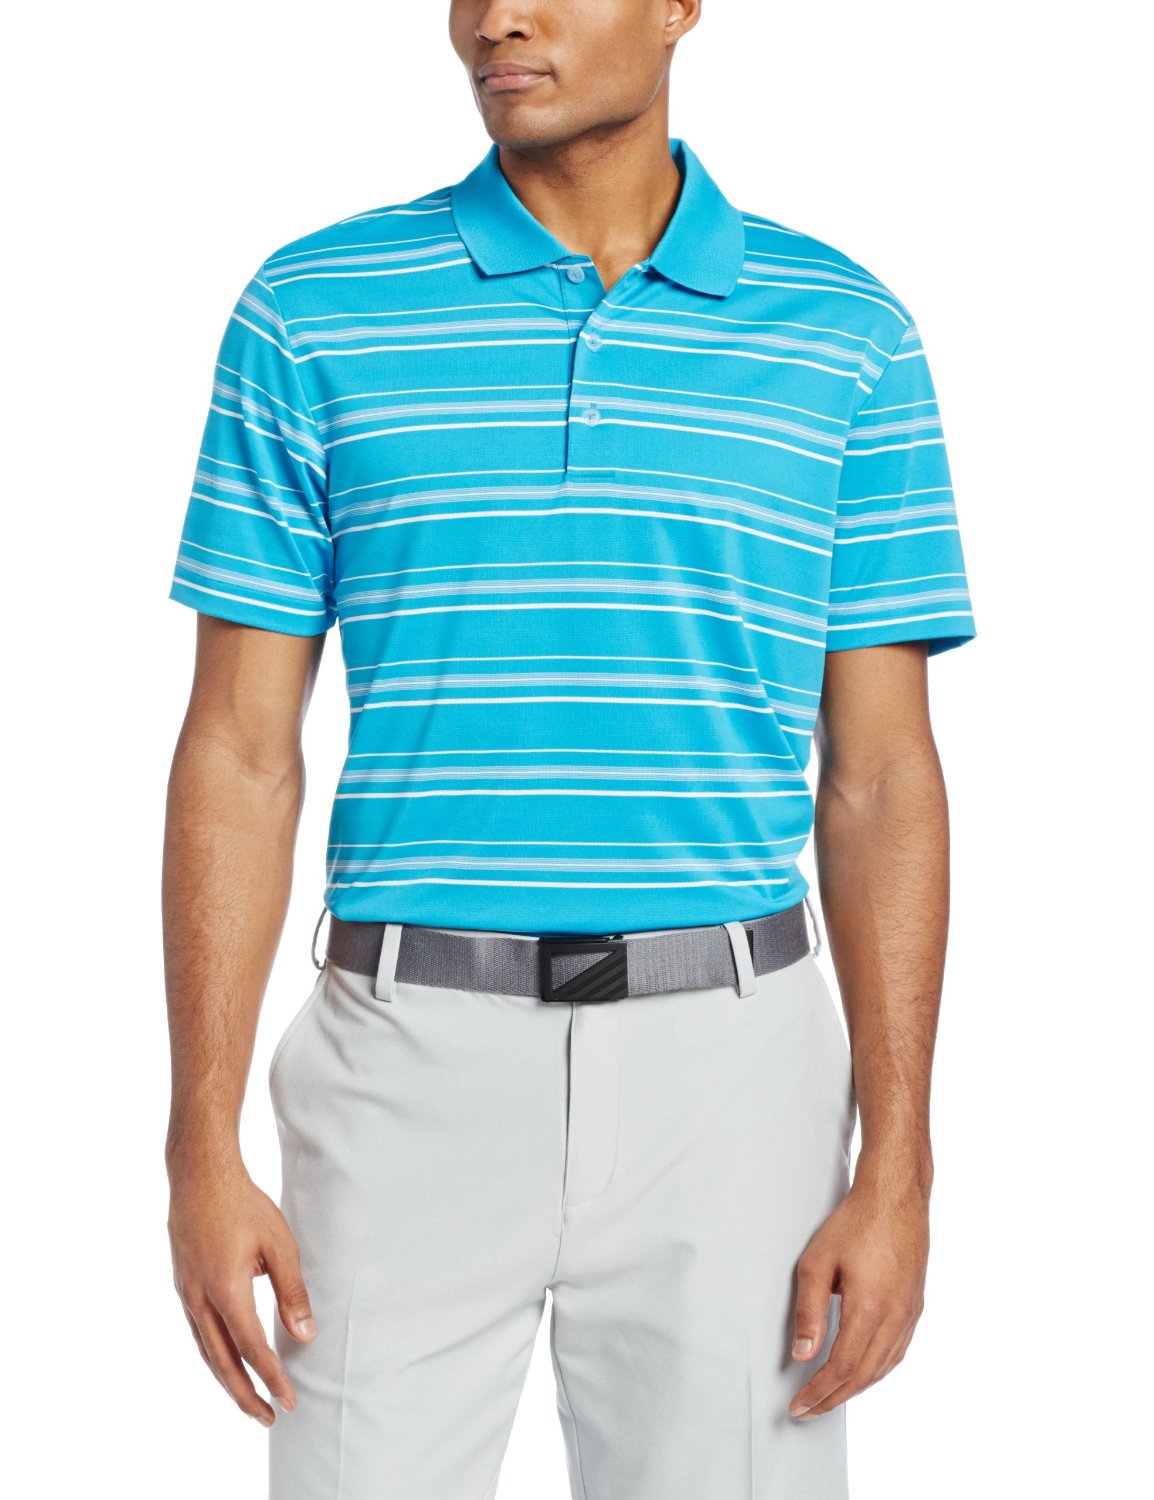 Adidas Mens Puremotion Textured Stripe Golf Shirts